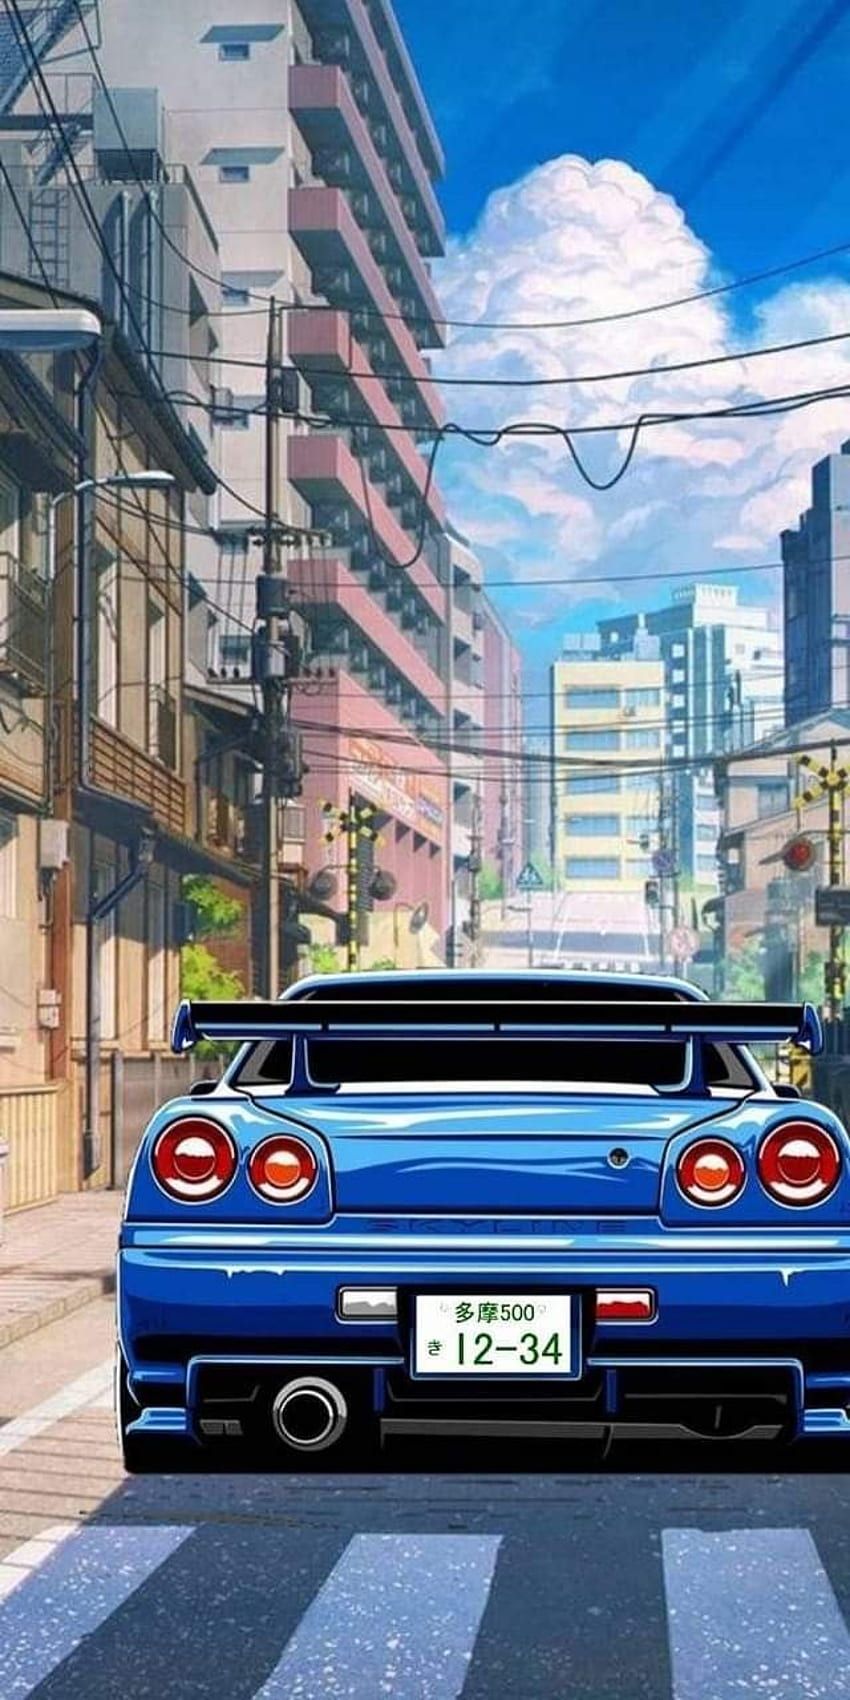 A blue car driving down the street - Nissan Skyline